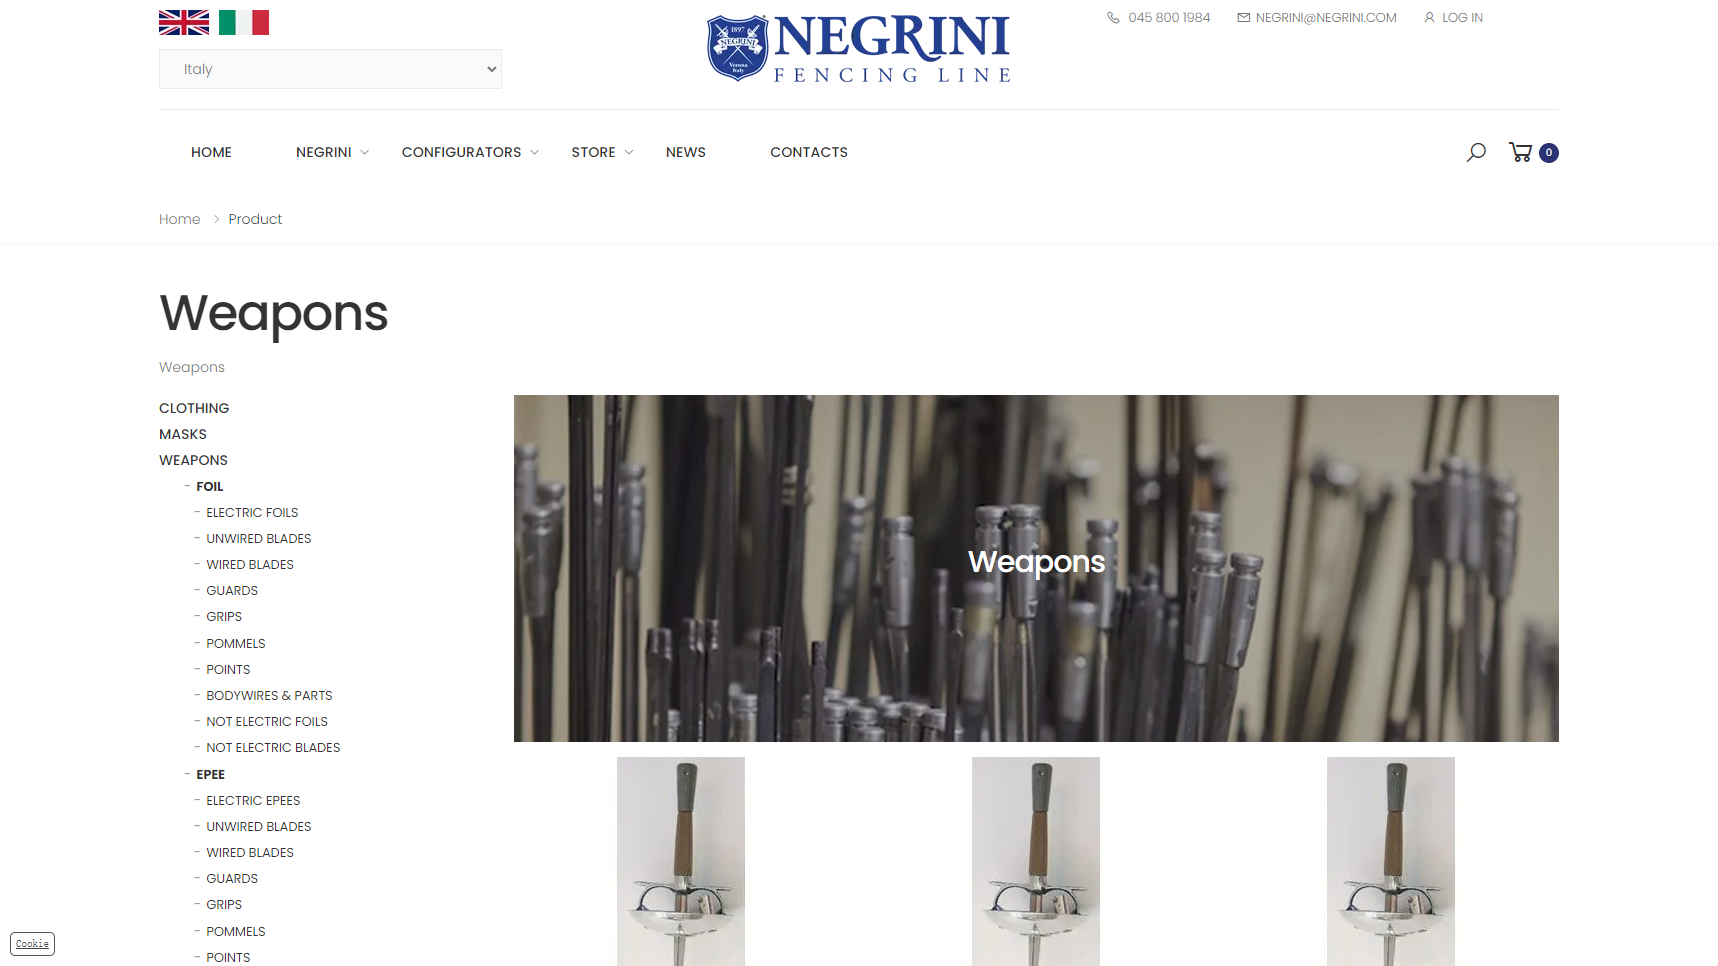 Negrini - Fencing Gear Manufacturer